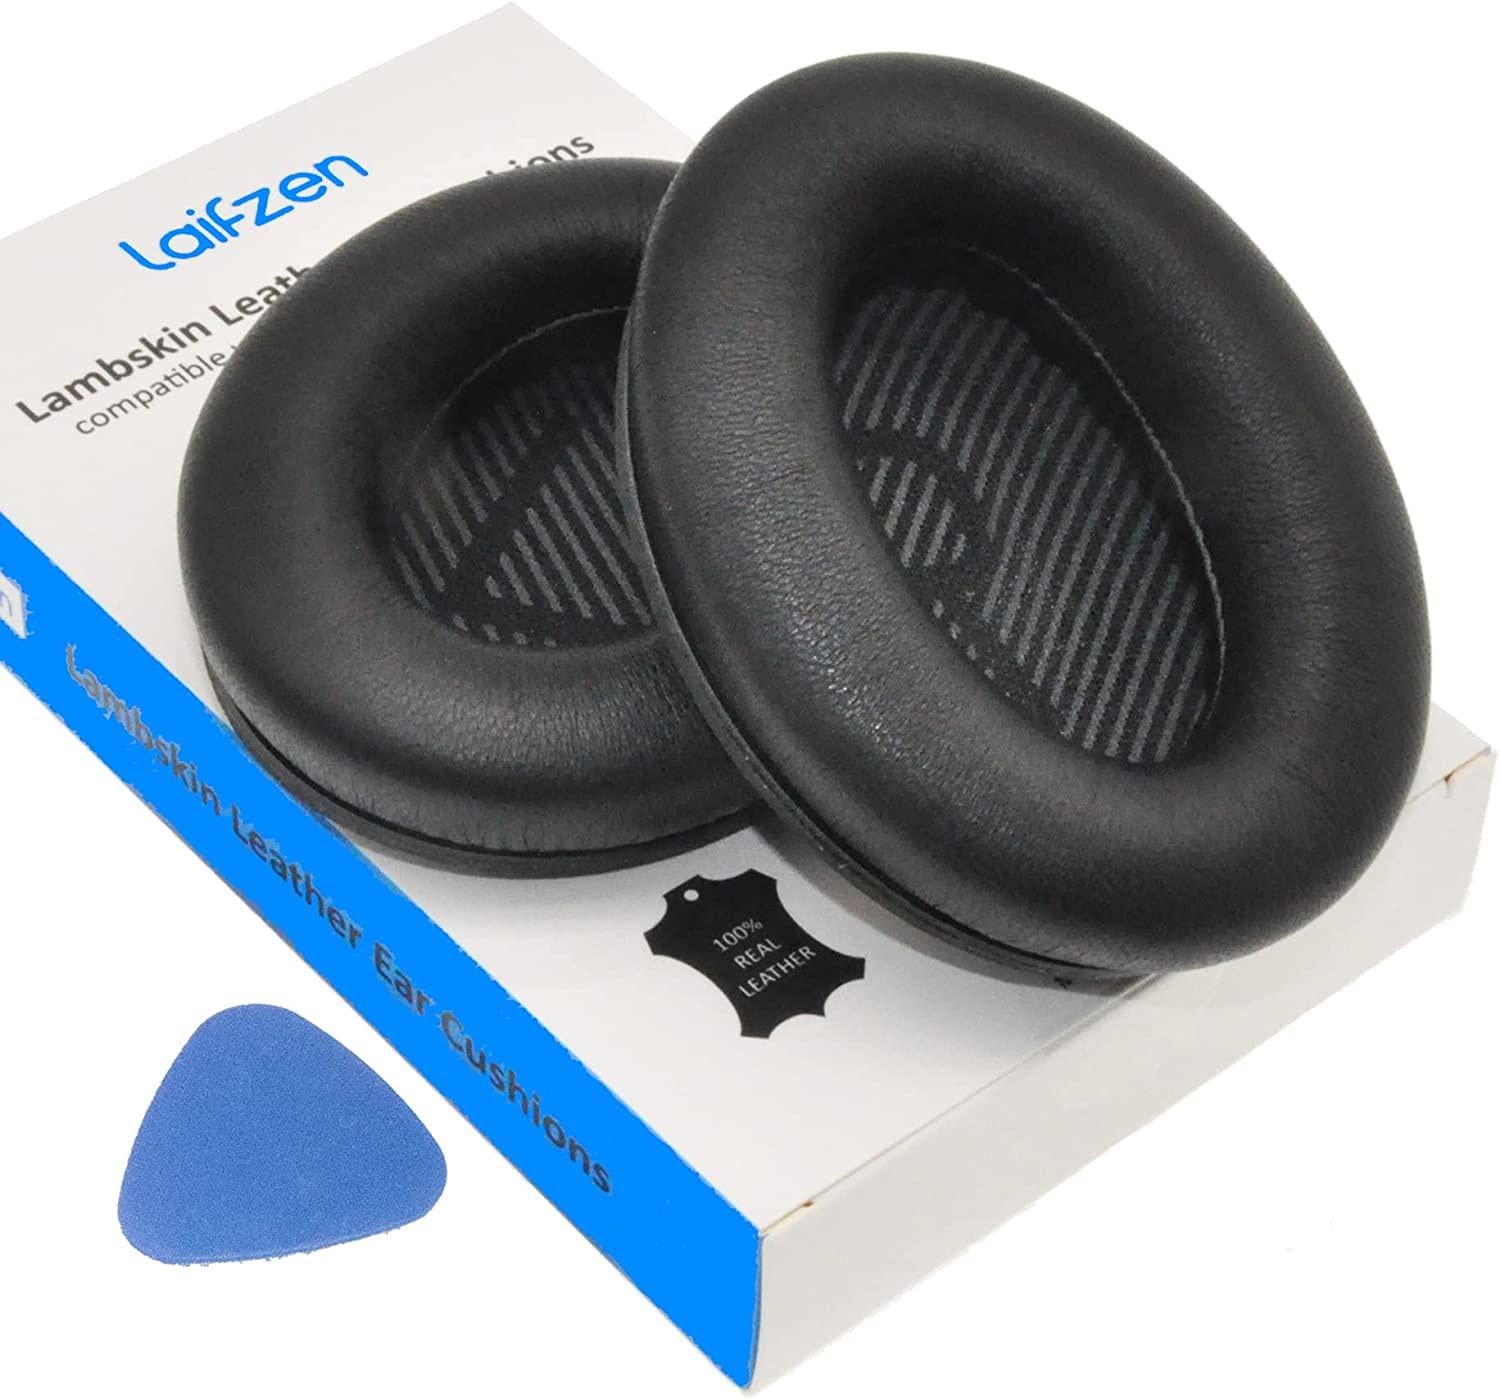 Laifzen, Lambskin Earpads Cushions Replacement Sheepskin Real Leather for Bose QuietComfort QC 35 II QC35ii QC35 QC25 QC15 QC2 AE2 SoundLink SoundTrue Headphones Ear Pads (Black)